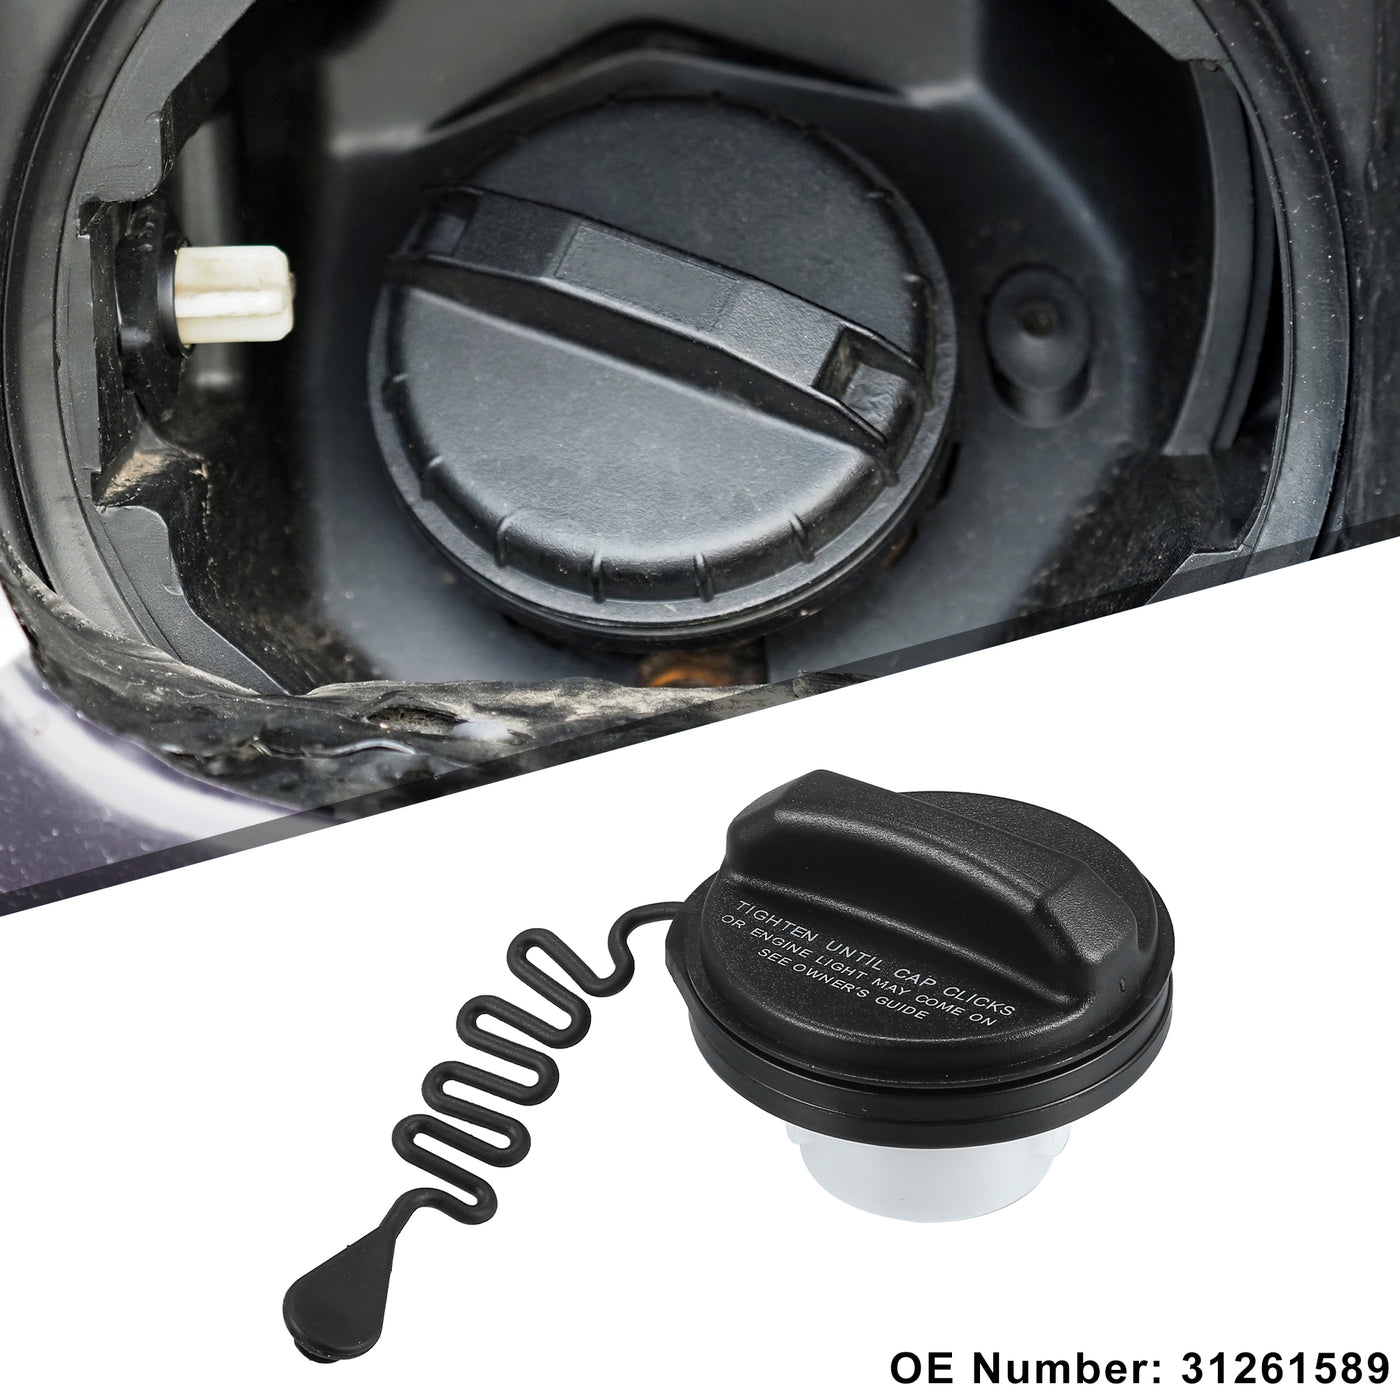 Motoforti Car Fuel Tank Filler Cover, Gas Tank Cap, for Volvo S40 2.5l 2004-2012, ABS, No.31261589, Black